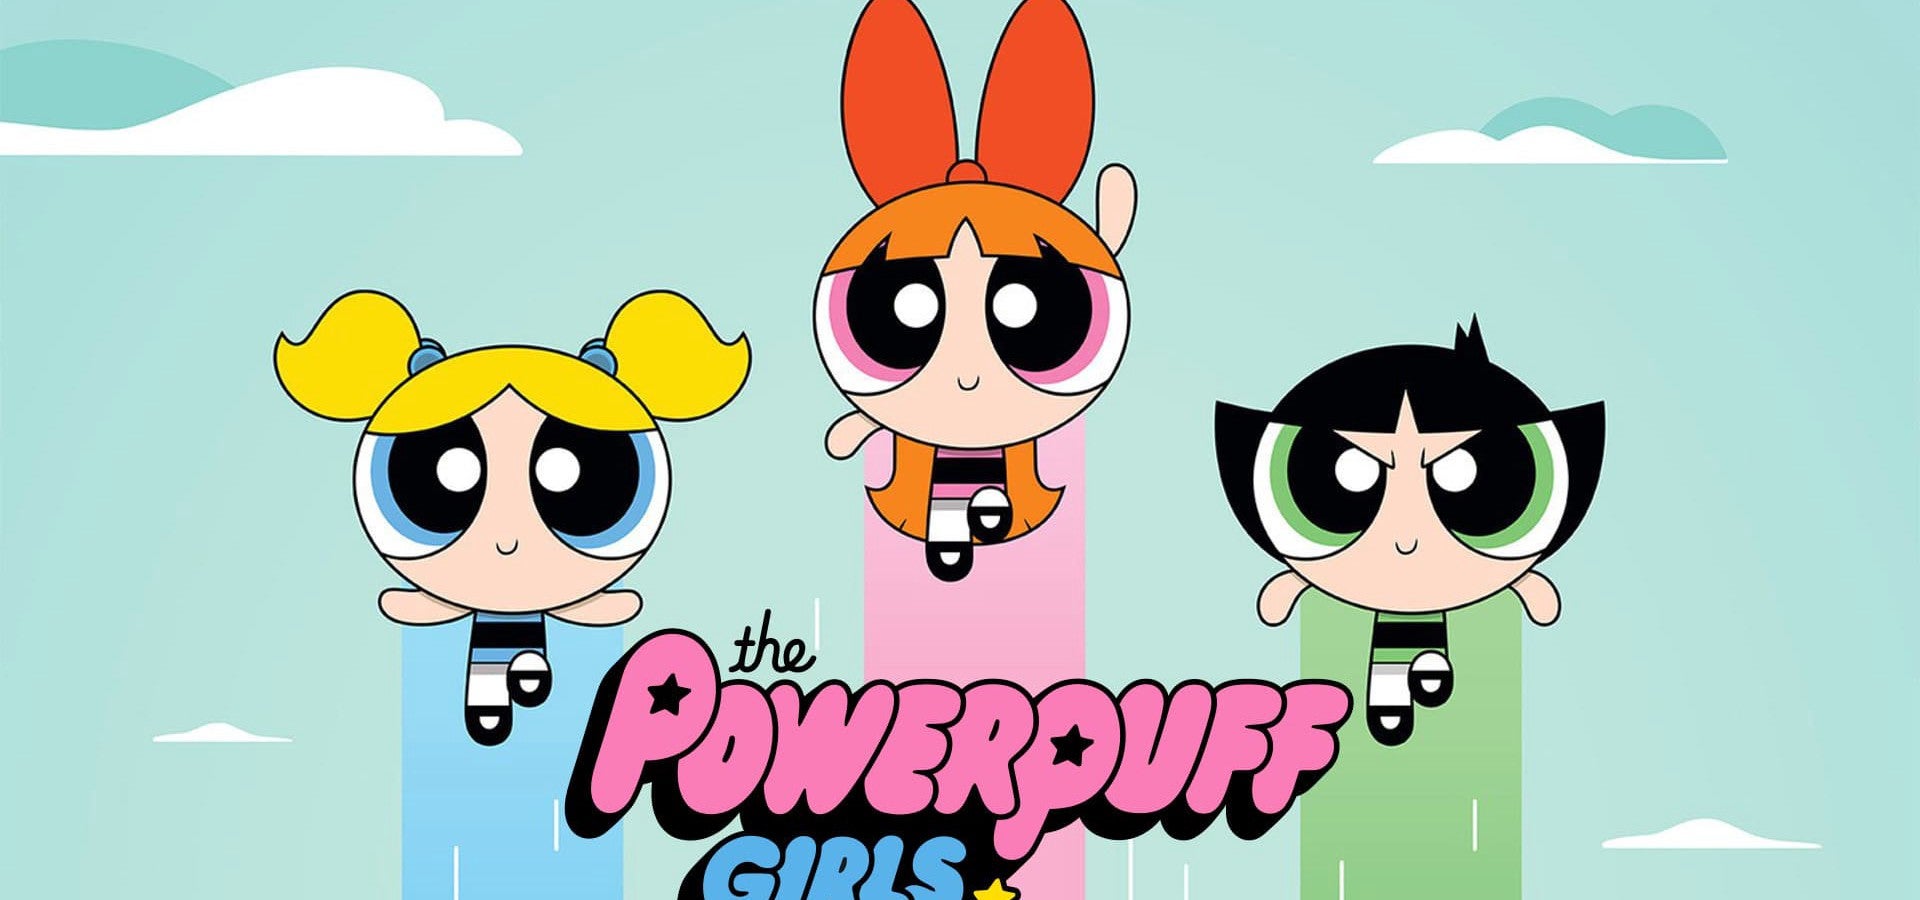 The Powerpuff Girls 16 On Amazon Video In United Kingdom Best Tv Shows To Watch Next Tvgeek